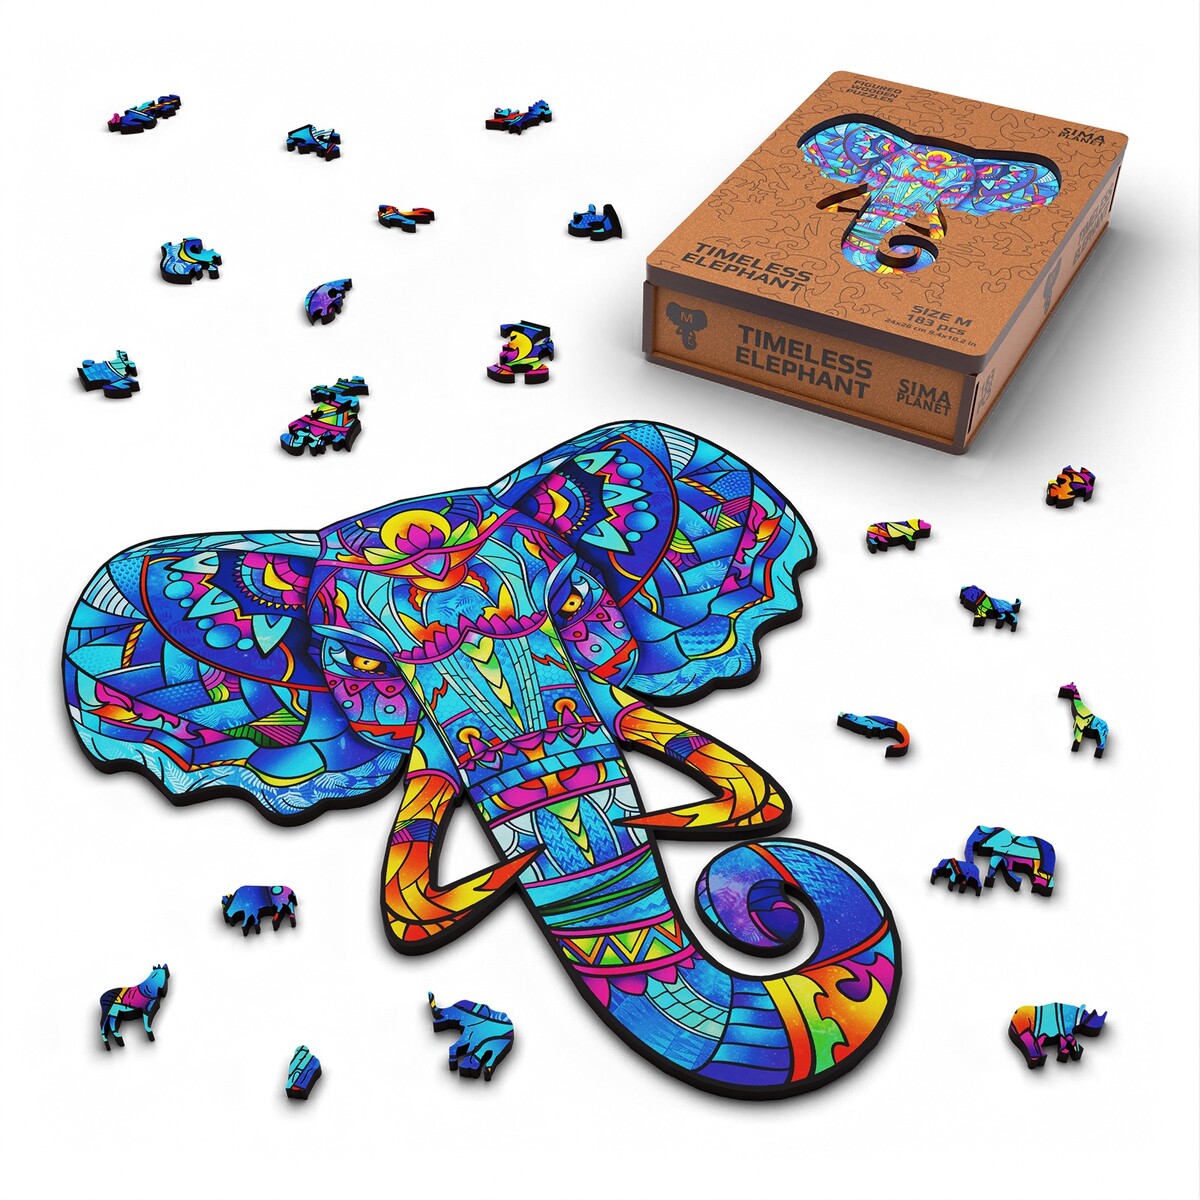 Пазл фигурный деревянный timeless elephant, размер 24х26 см, 183 детали фигурный деревянный пазл kiddieart сапсан 133 детали